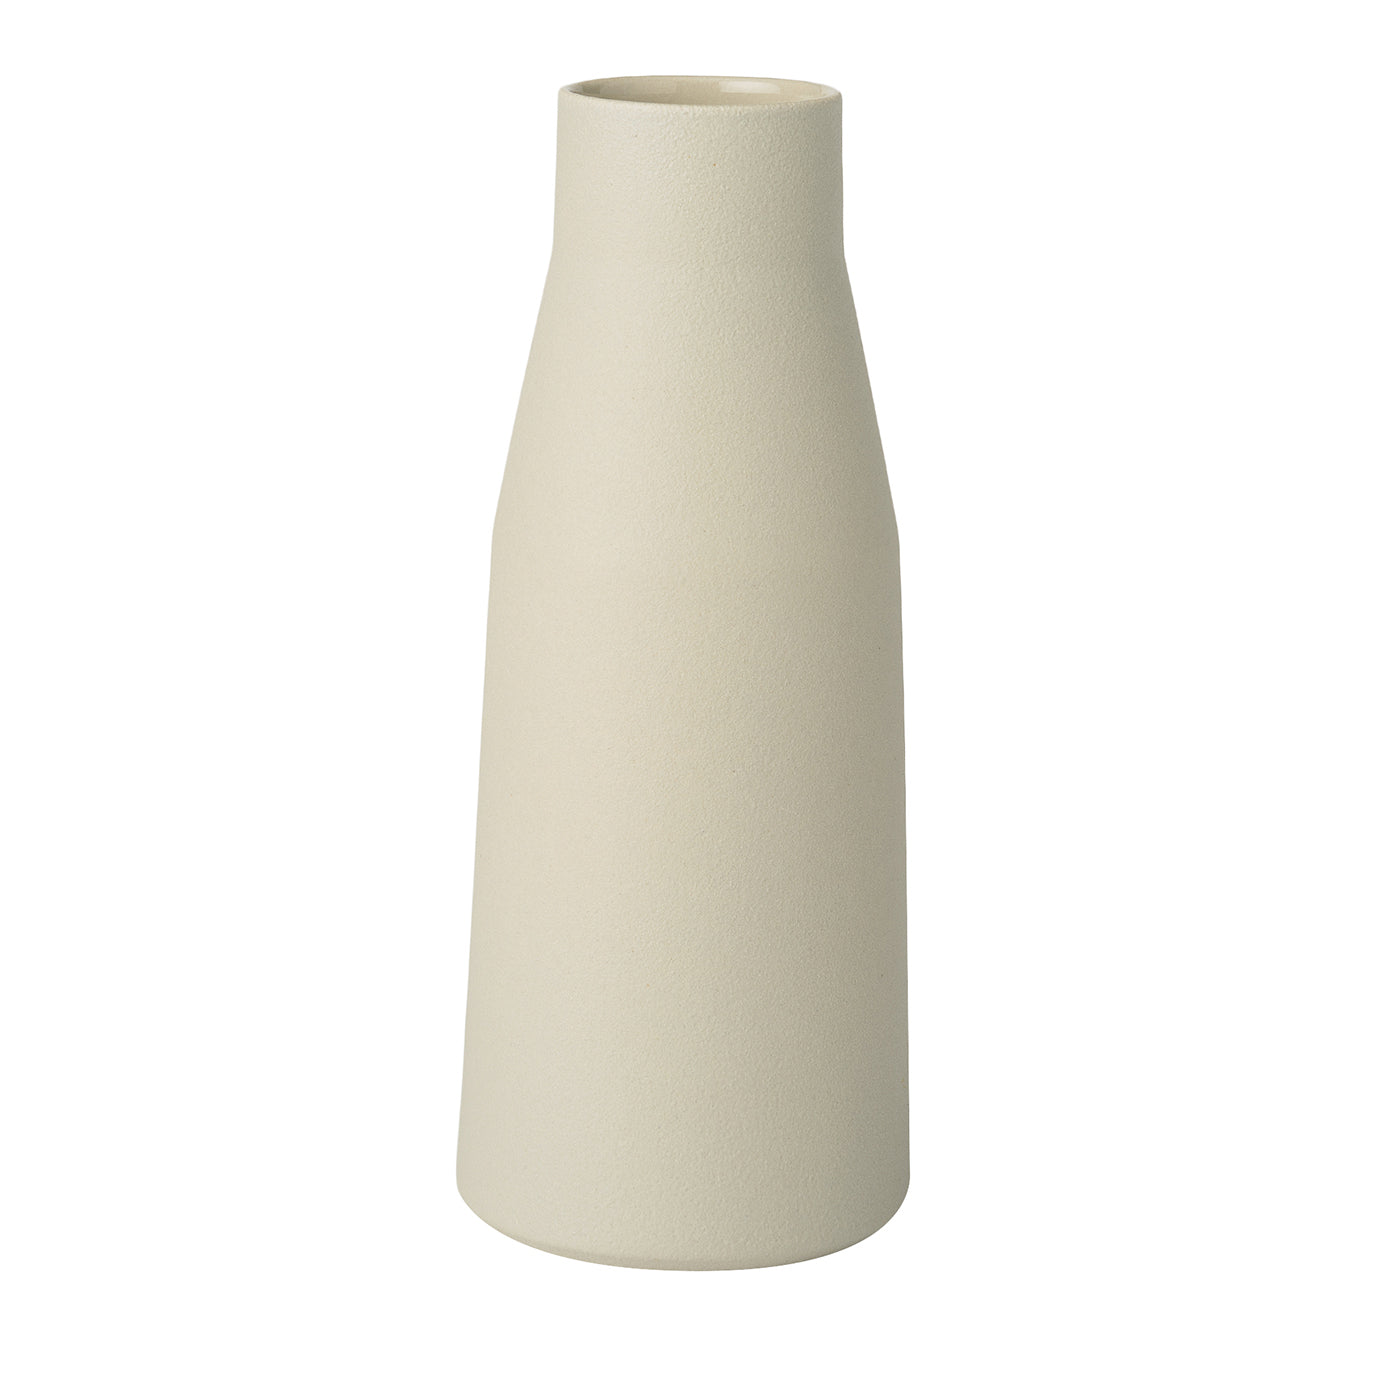 Ceramic Vase or Carafe - Main view